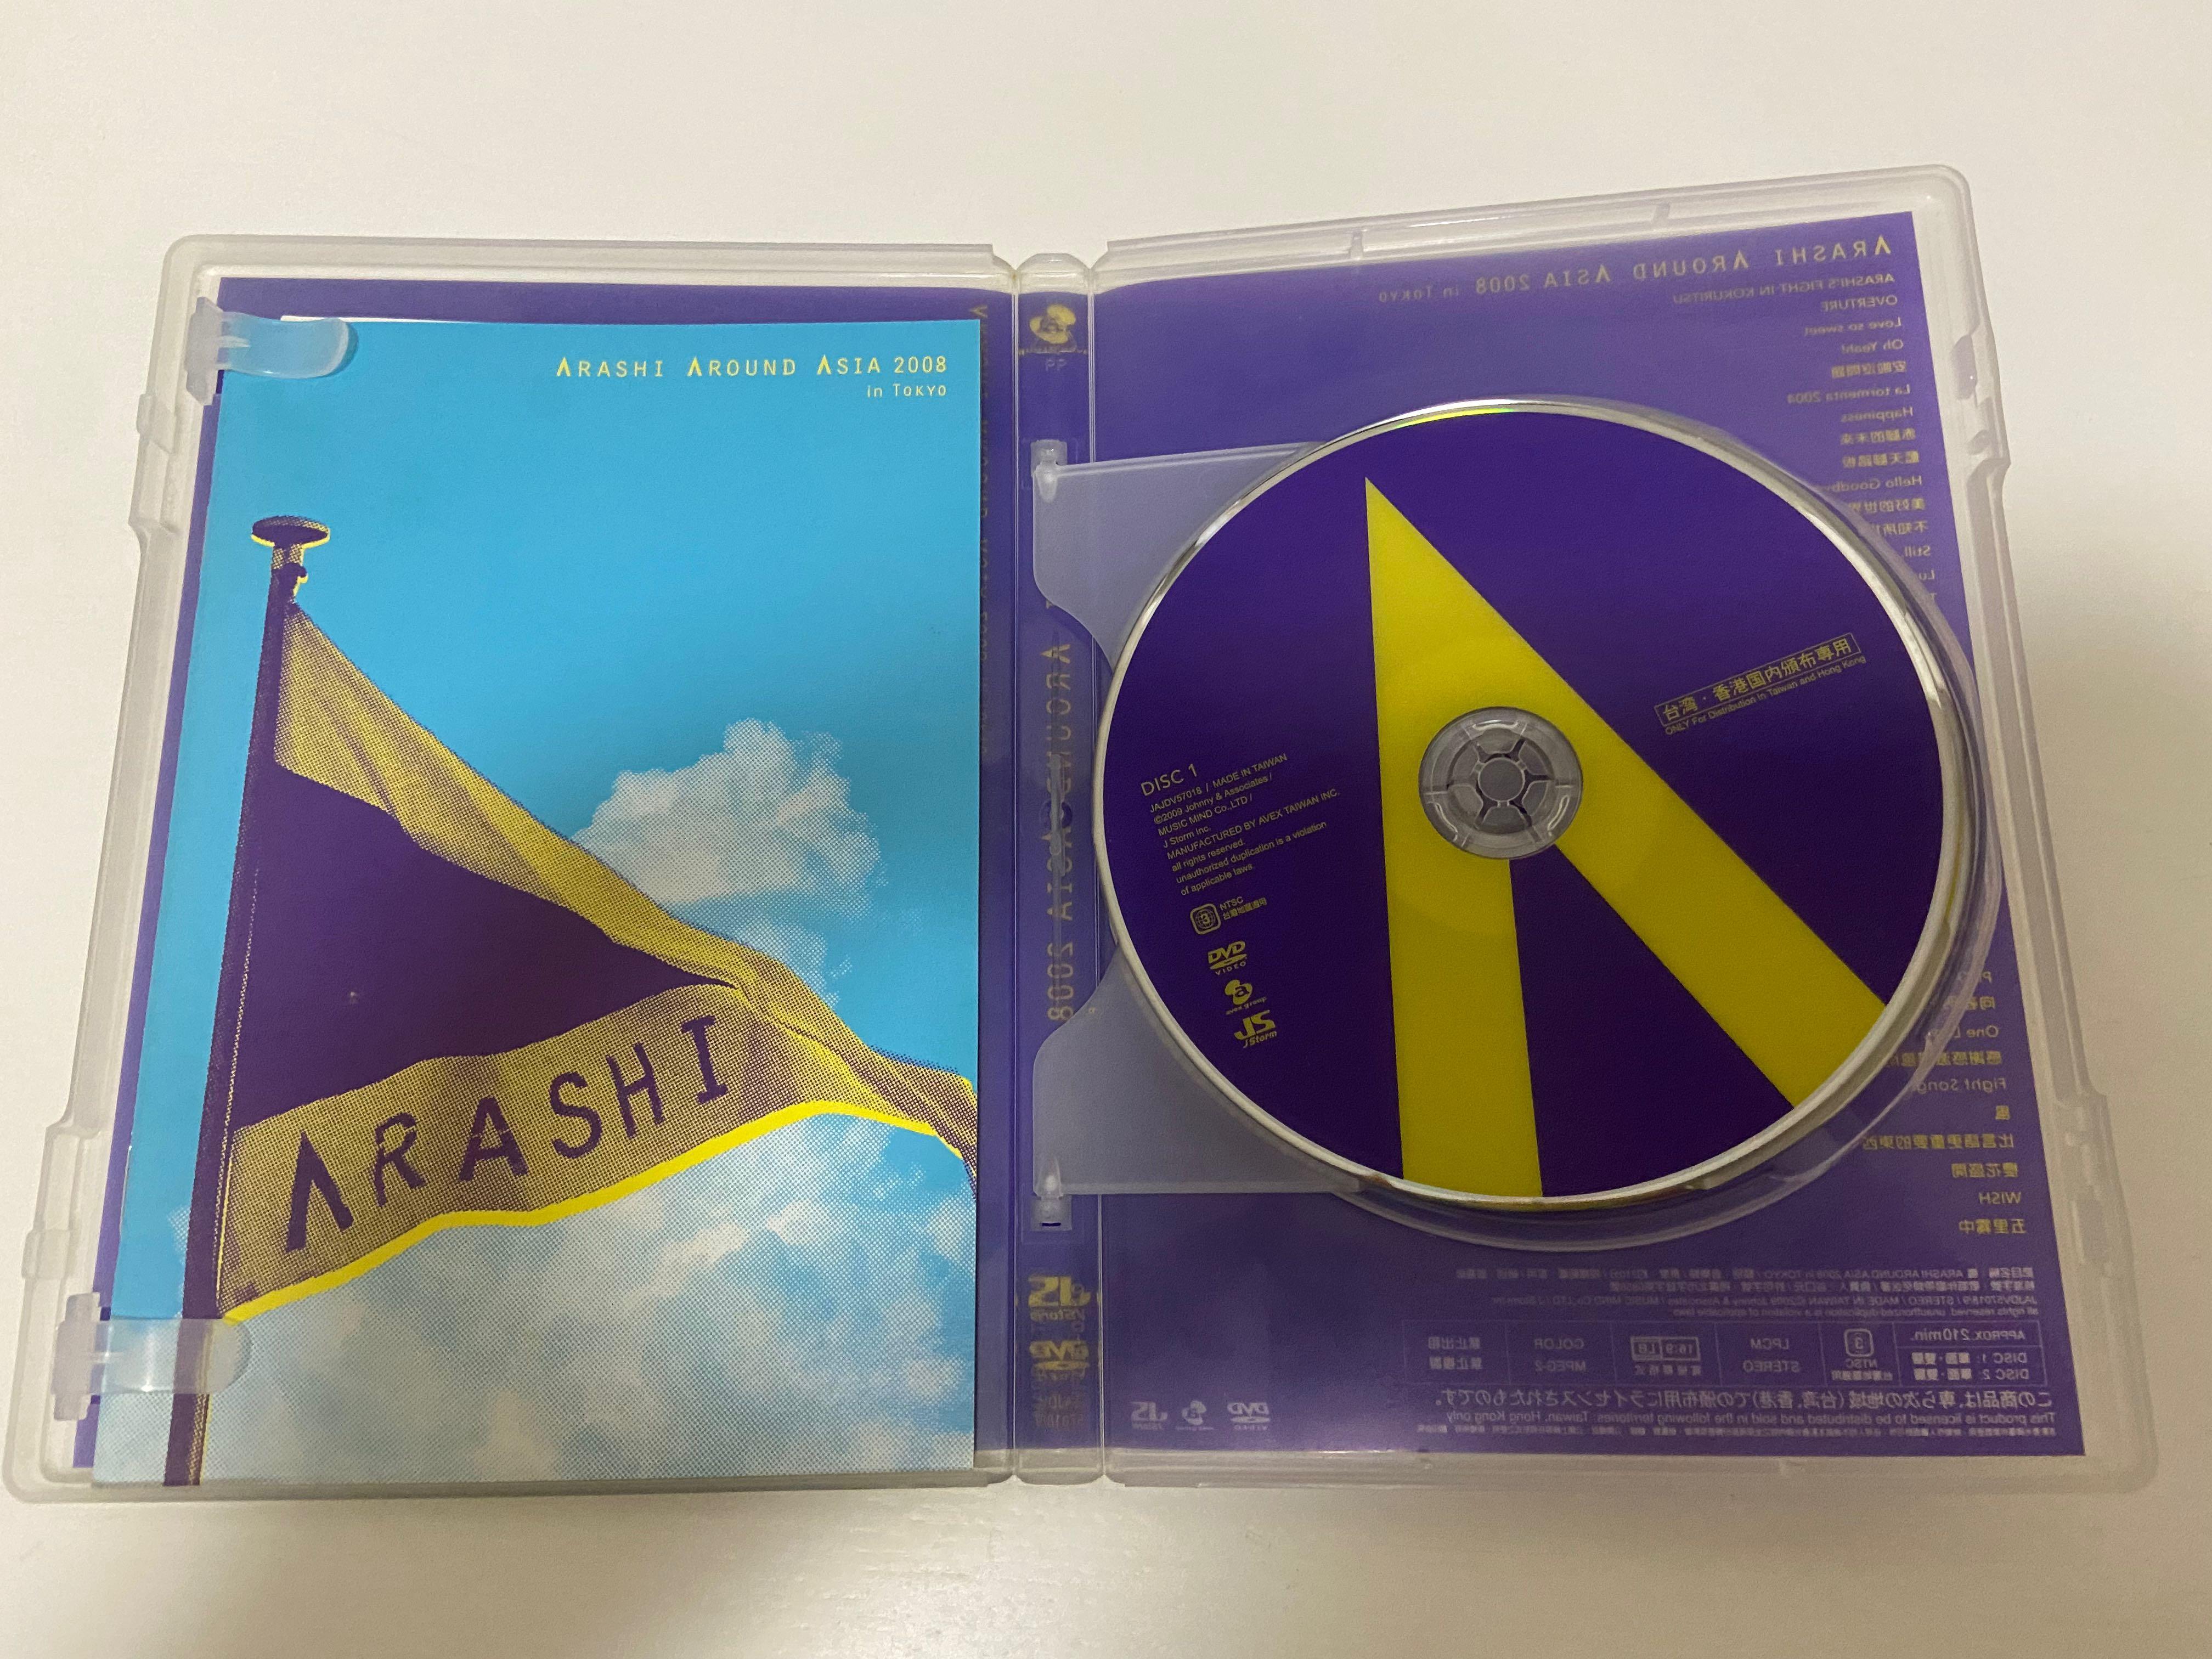 嵐ARASHI AROUND ASIA 2008 in TOKYO DVD, 興趣及遊戲, 音樂、樂器